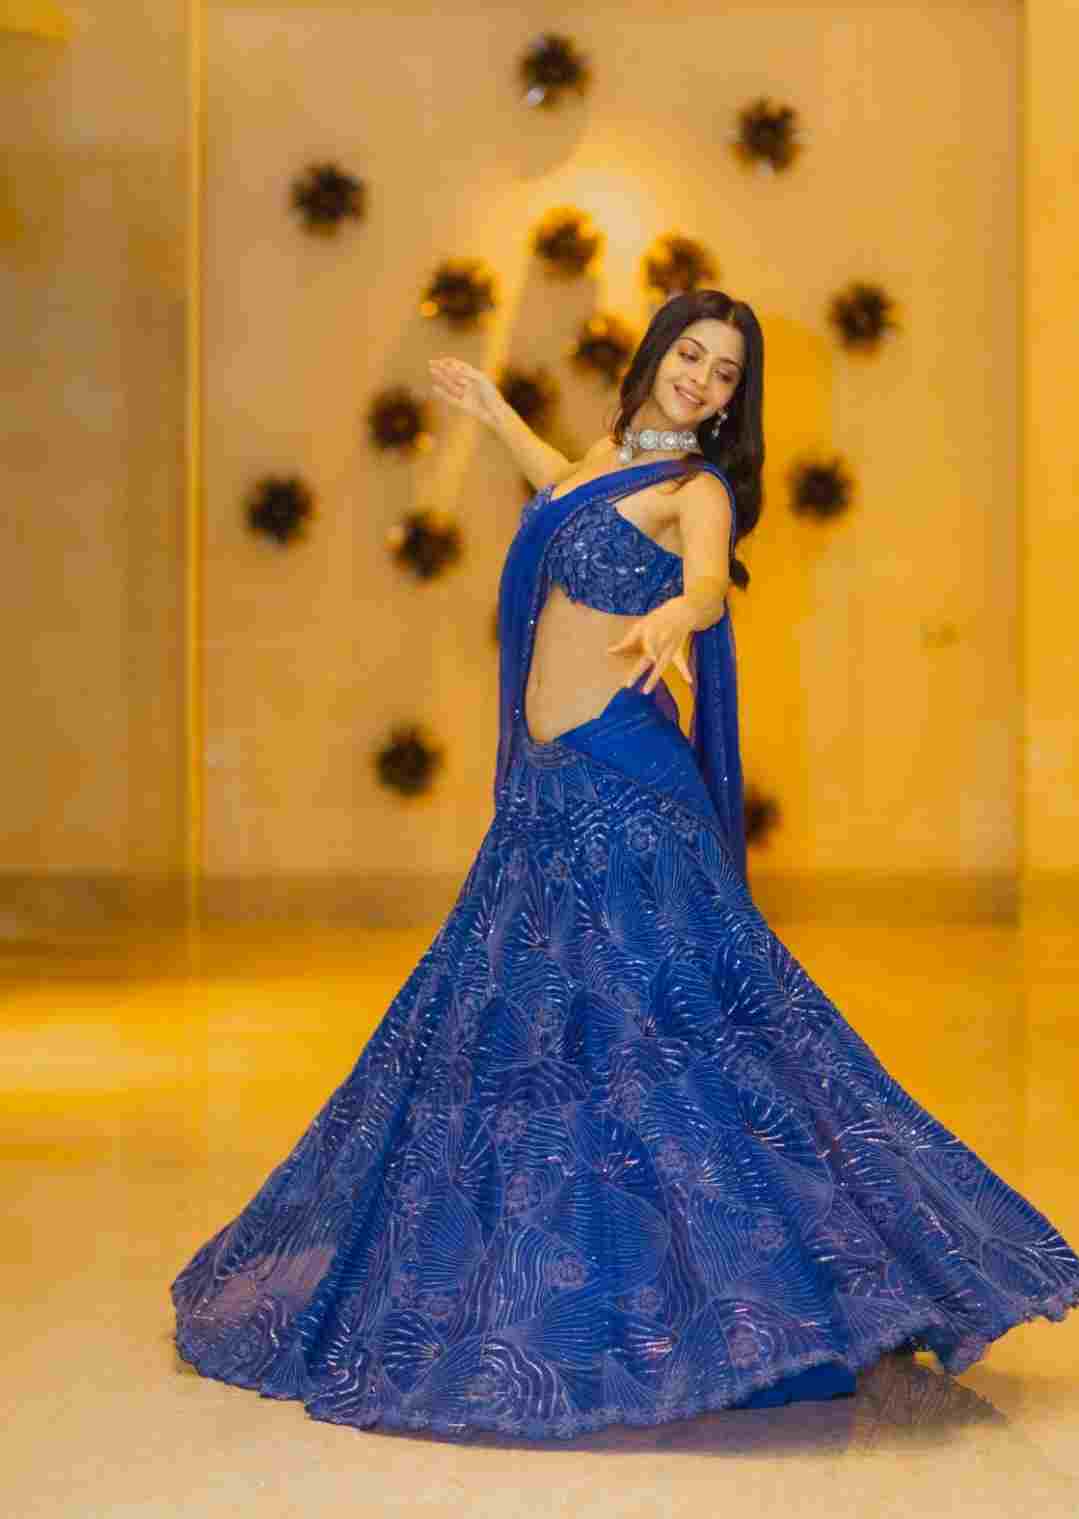 original/actress-vedika-looks-beautiful-in-blue-dress-1-